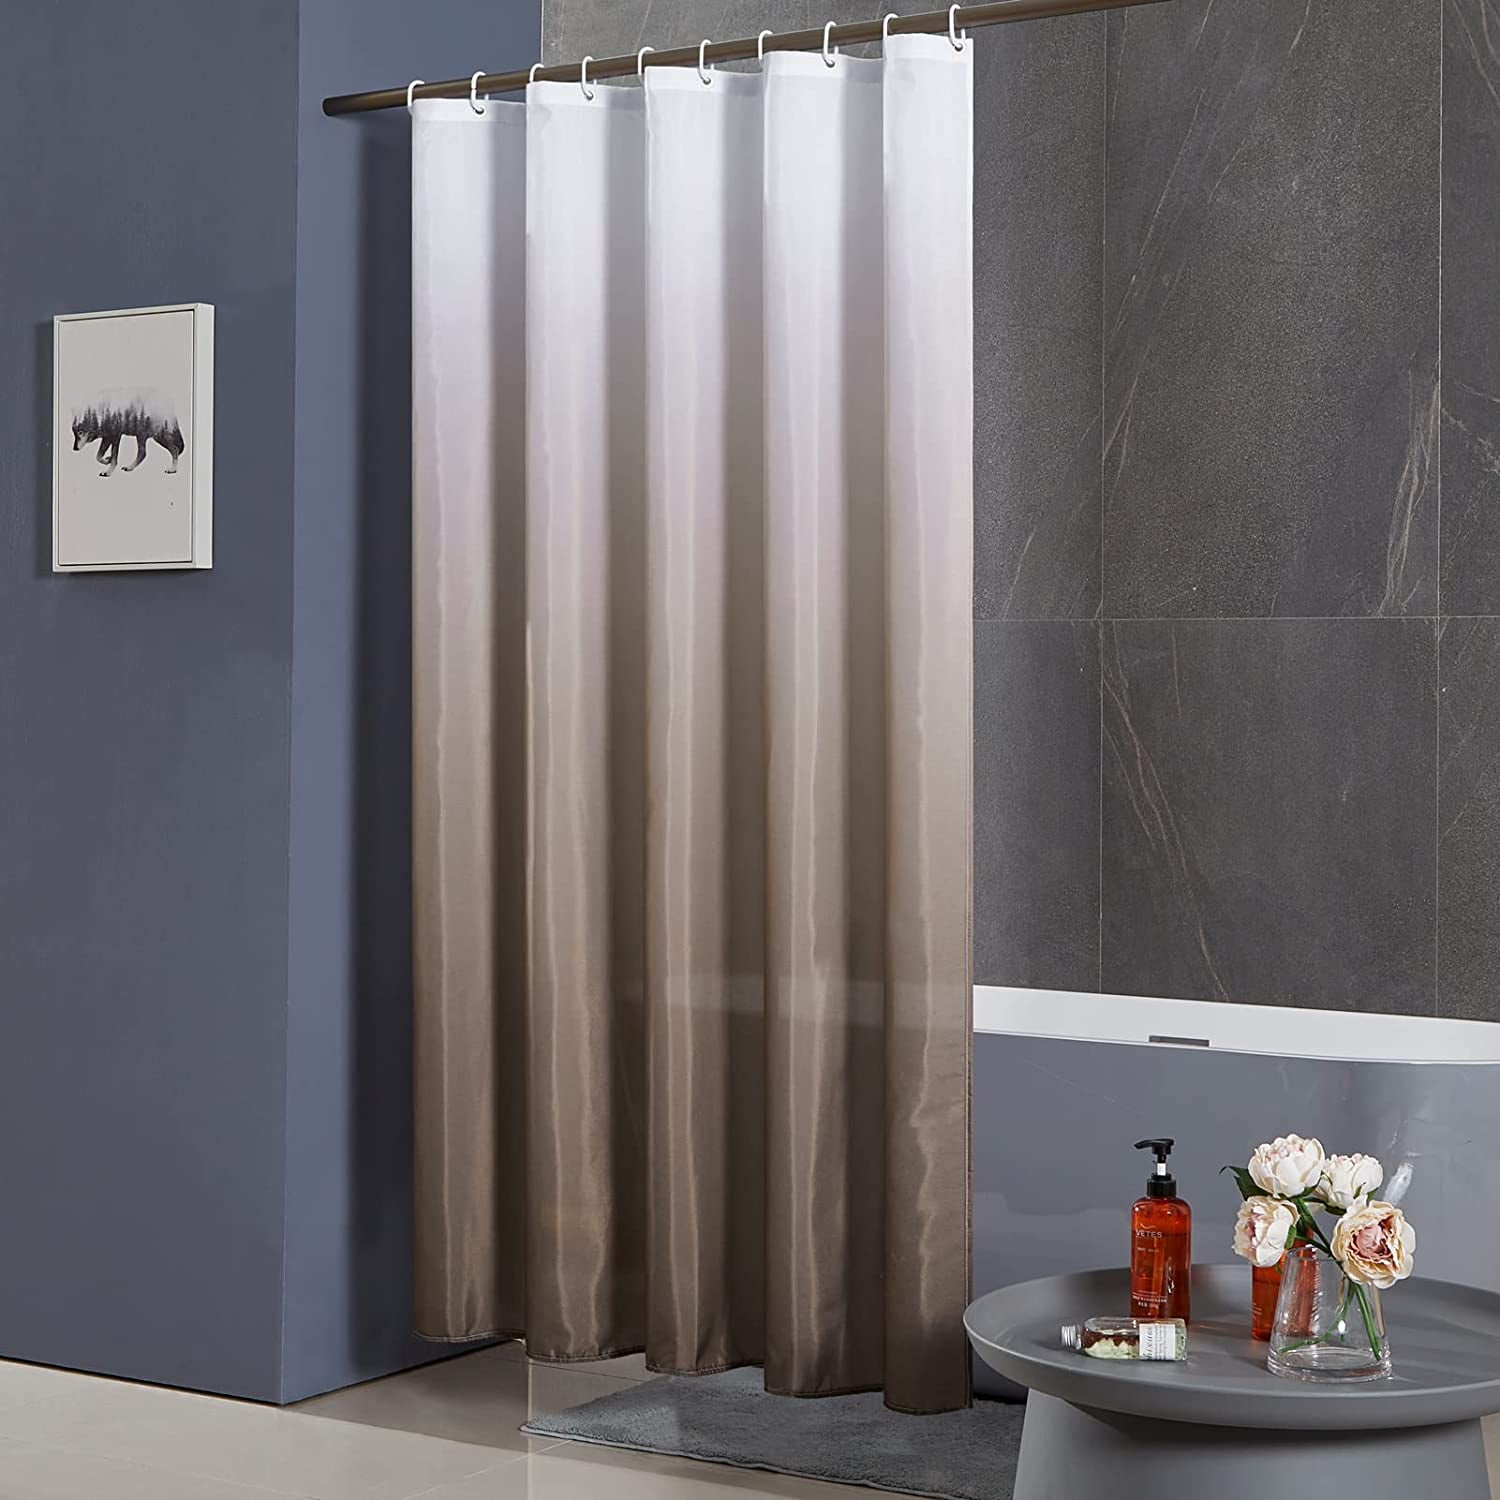 Fabric Shower Curtain Liner Bathroom Decorative Waterproof Polyester with 12 Hooks Mildew resistant Machine Washable 180cm x 180cm Blue Stripe Gradient Stripes blue 